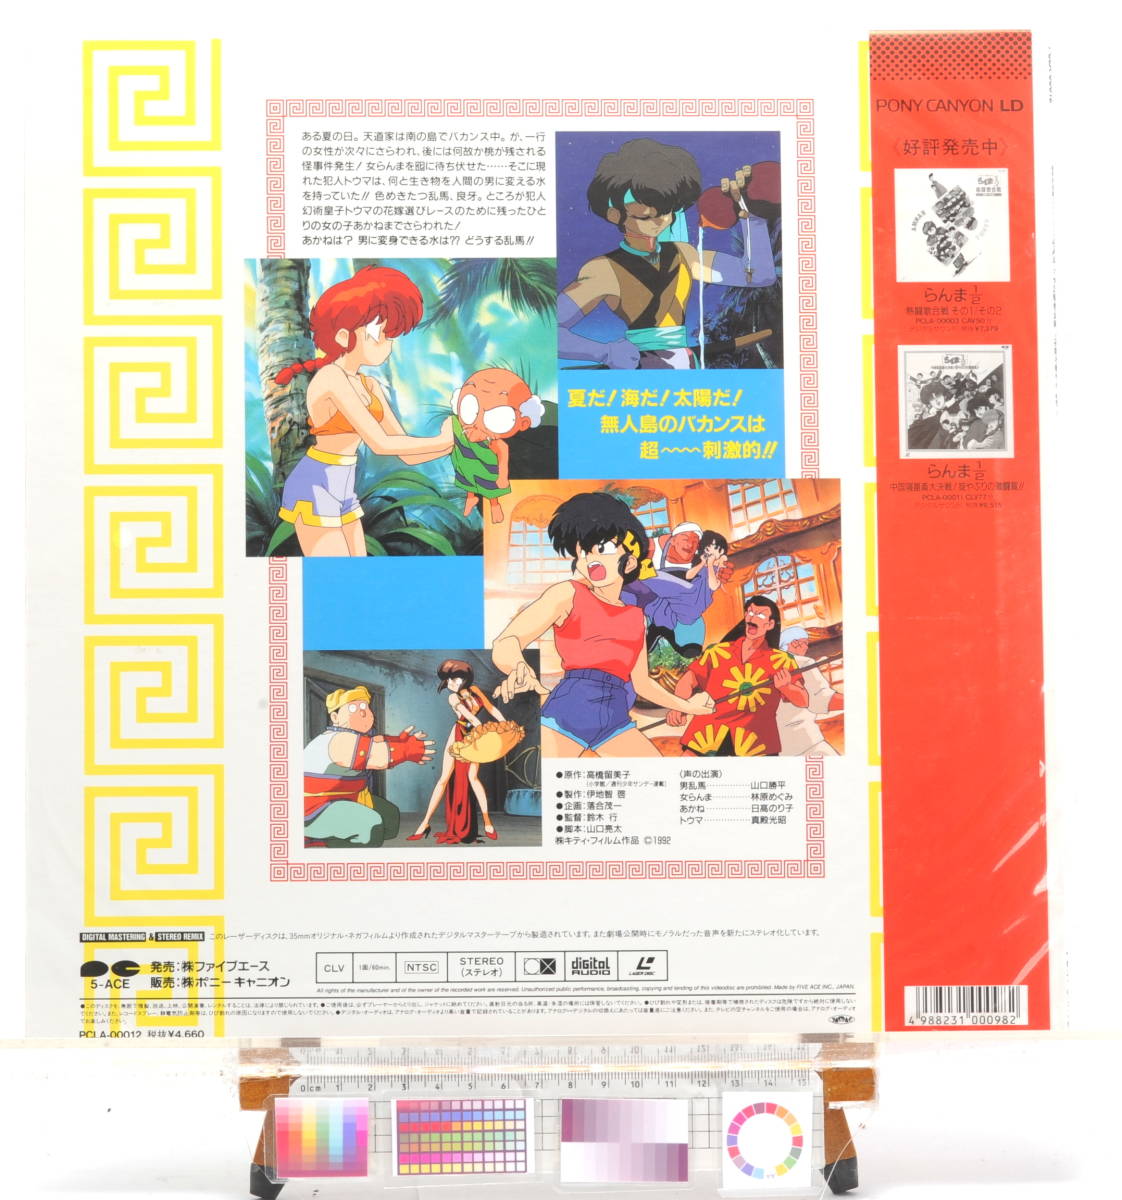 [Delivery Free]1990s- Ranma1/2OVA(Rumiko Takahashi)Leser Disk Jacket [Bonus:LD SOFT(JPN)]らんま1/2 決戦桃源郷LDジャケット[tagLD]_画像2